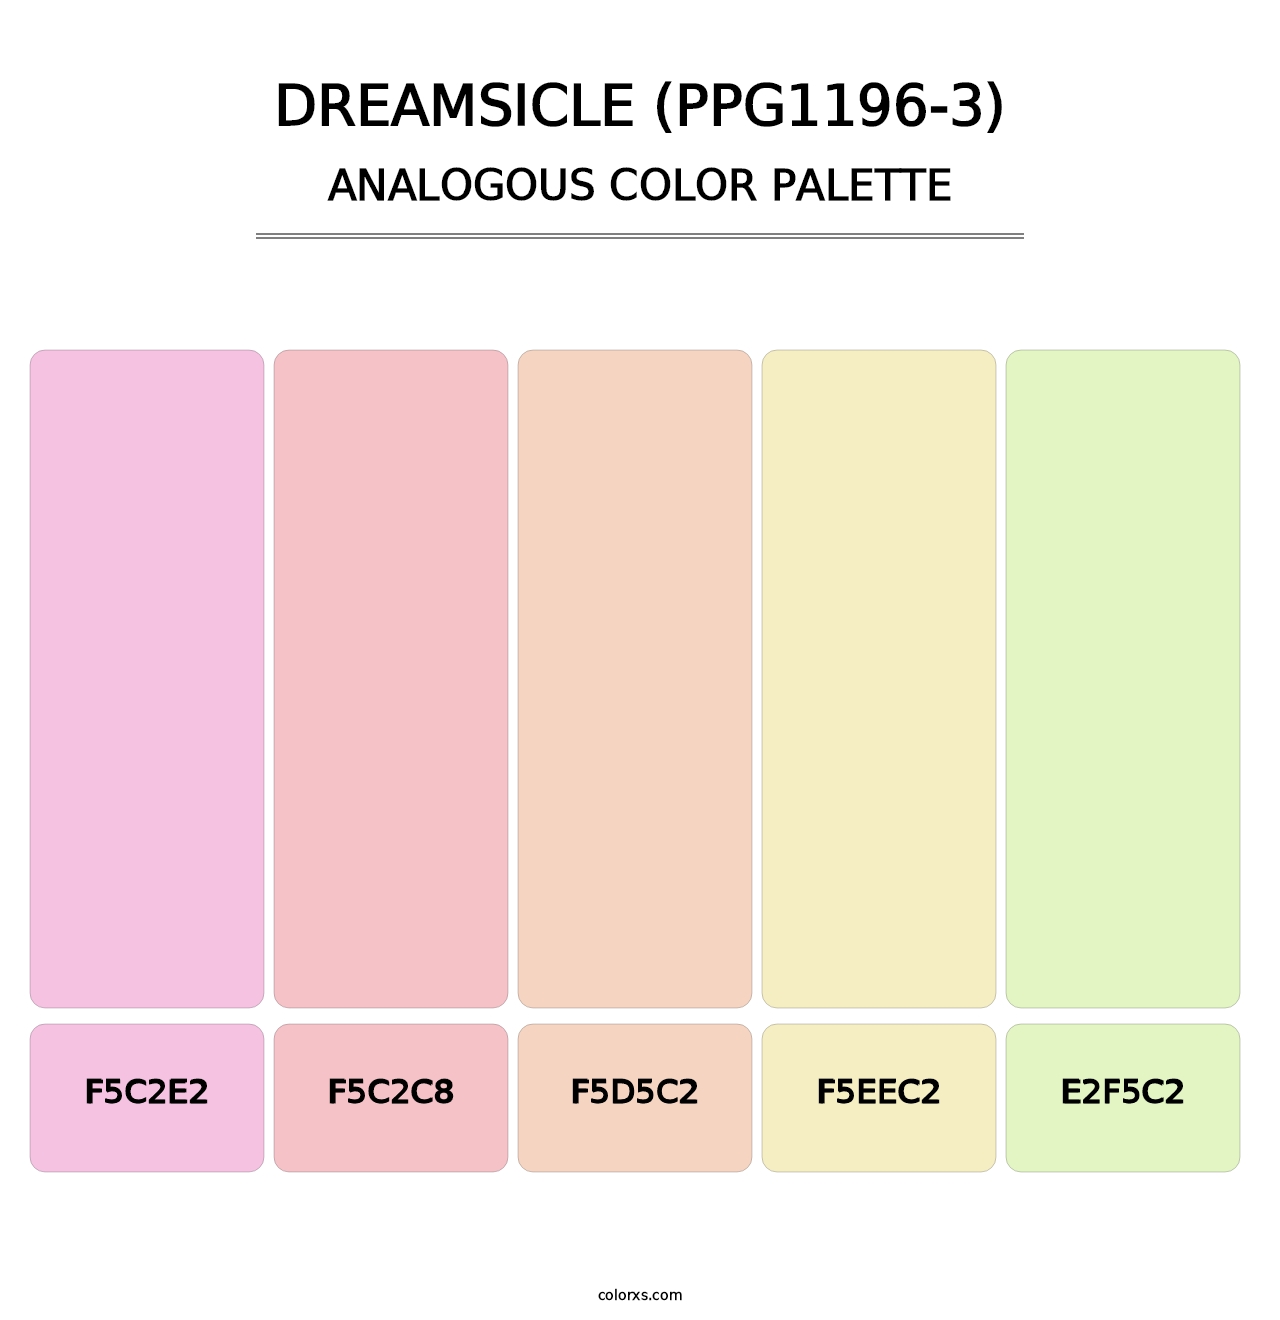 Dreamsicle (PPG1196-3) - Analogous Color Palette